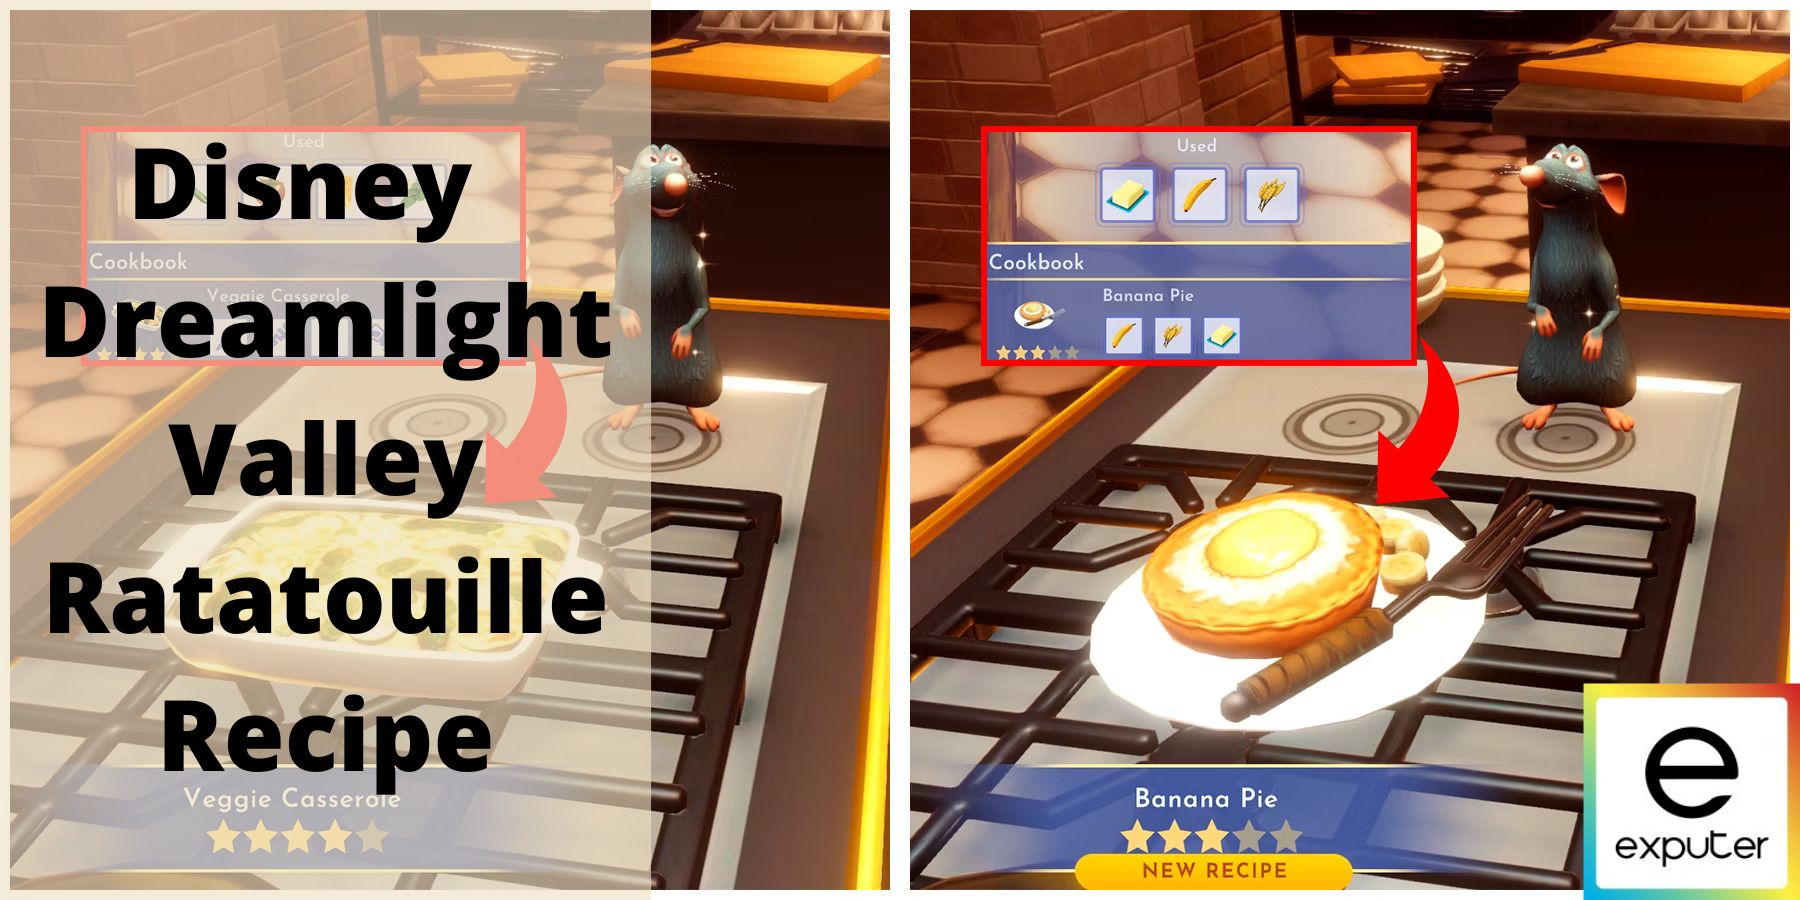 Ratatouille Recipe in Disney Dreamlight Valley